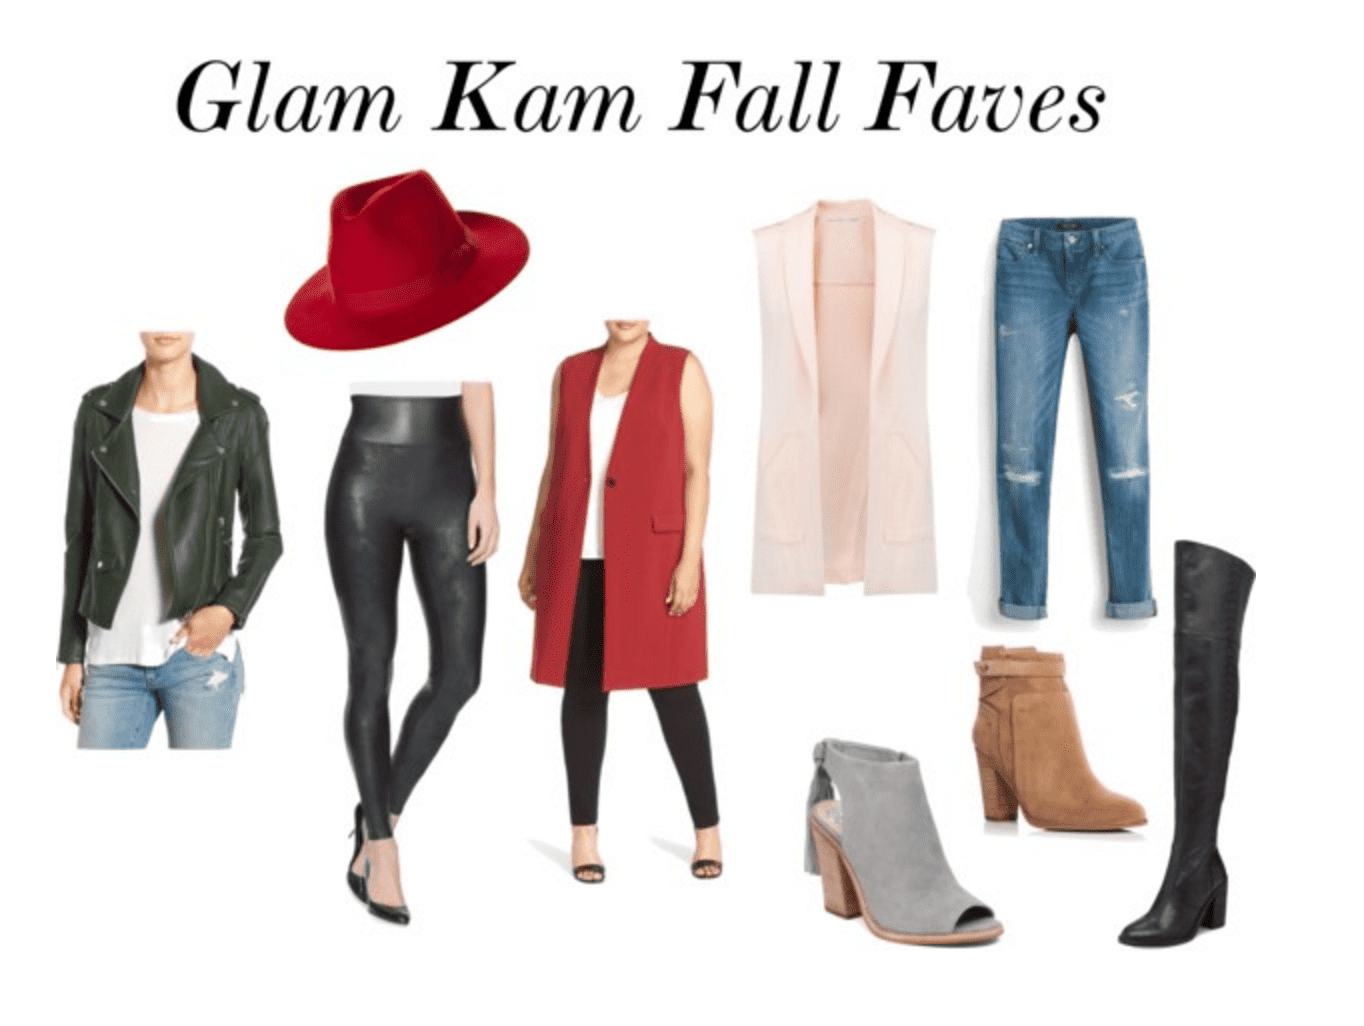 Fave Fall Fashion Pieces